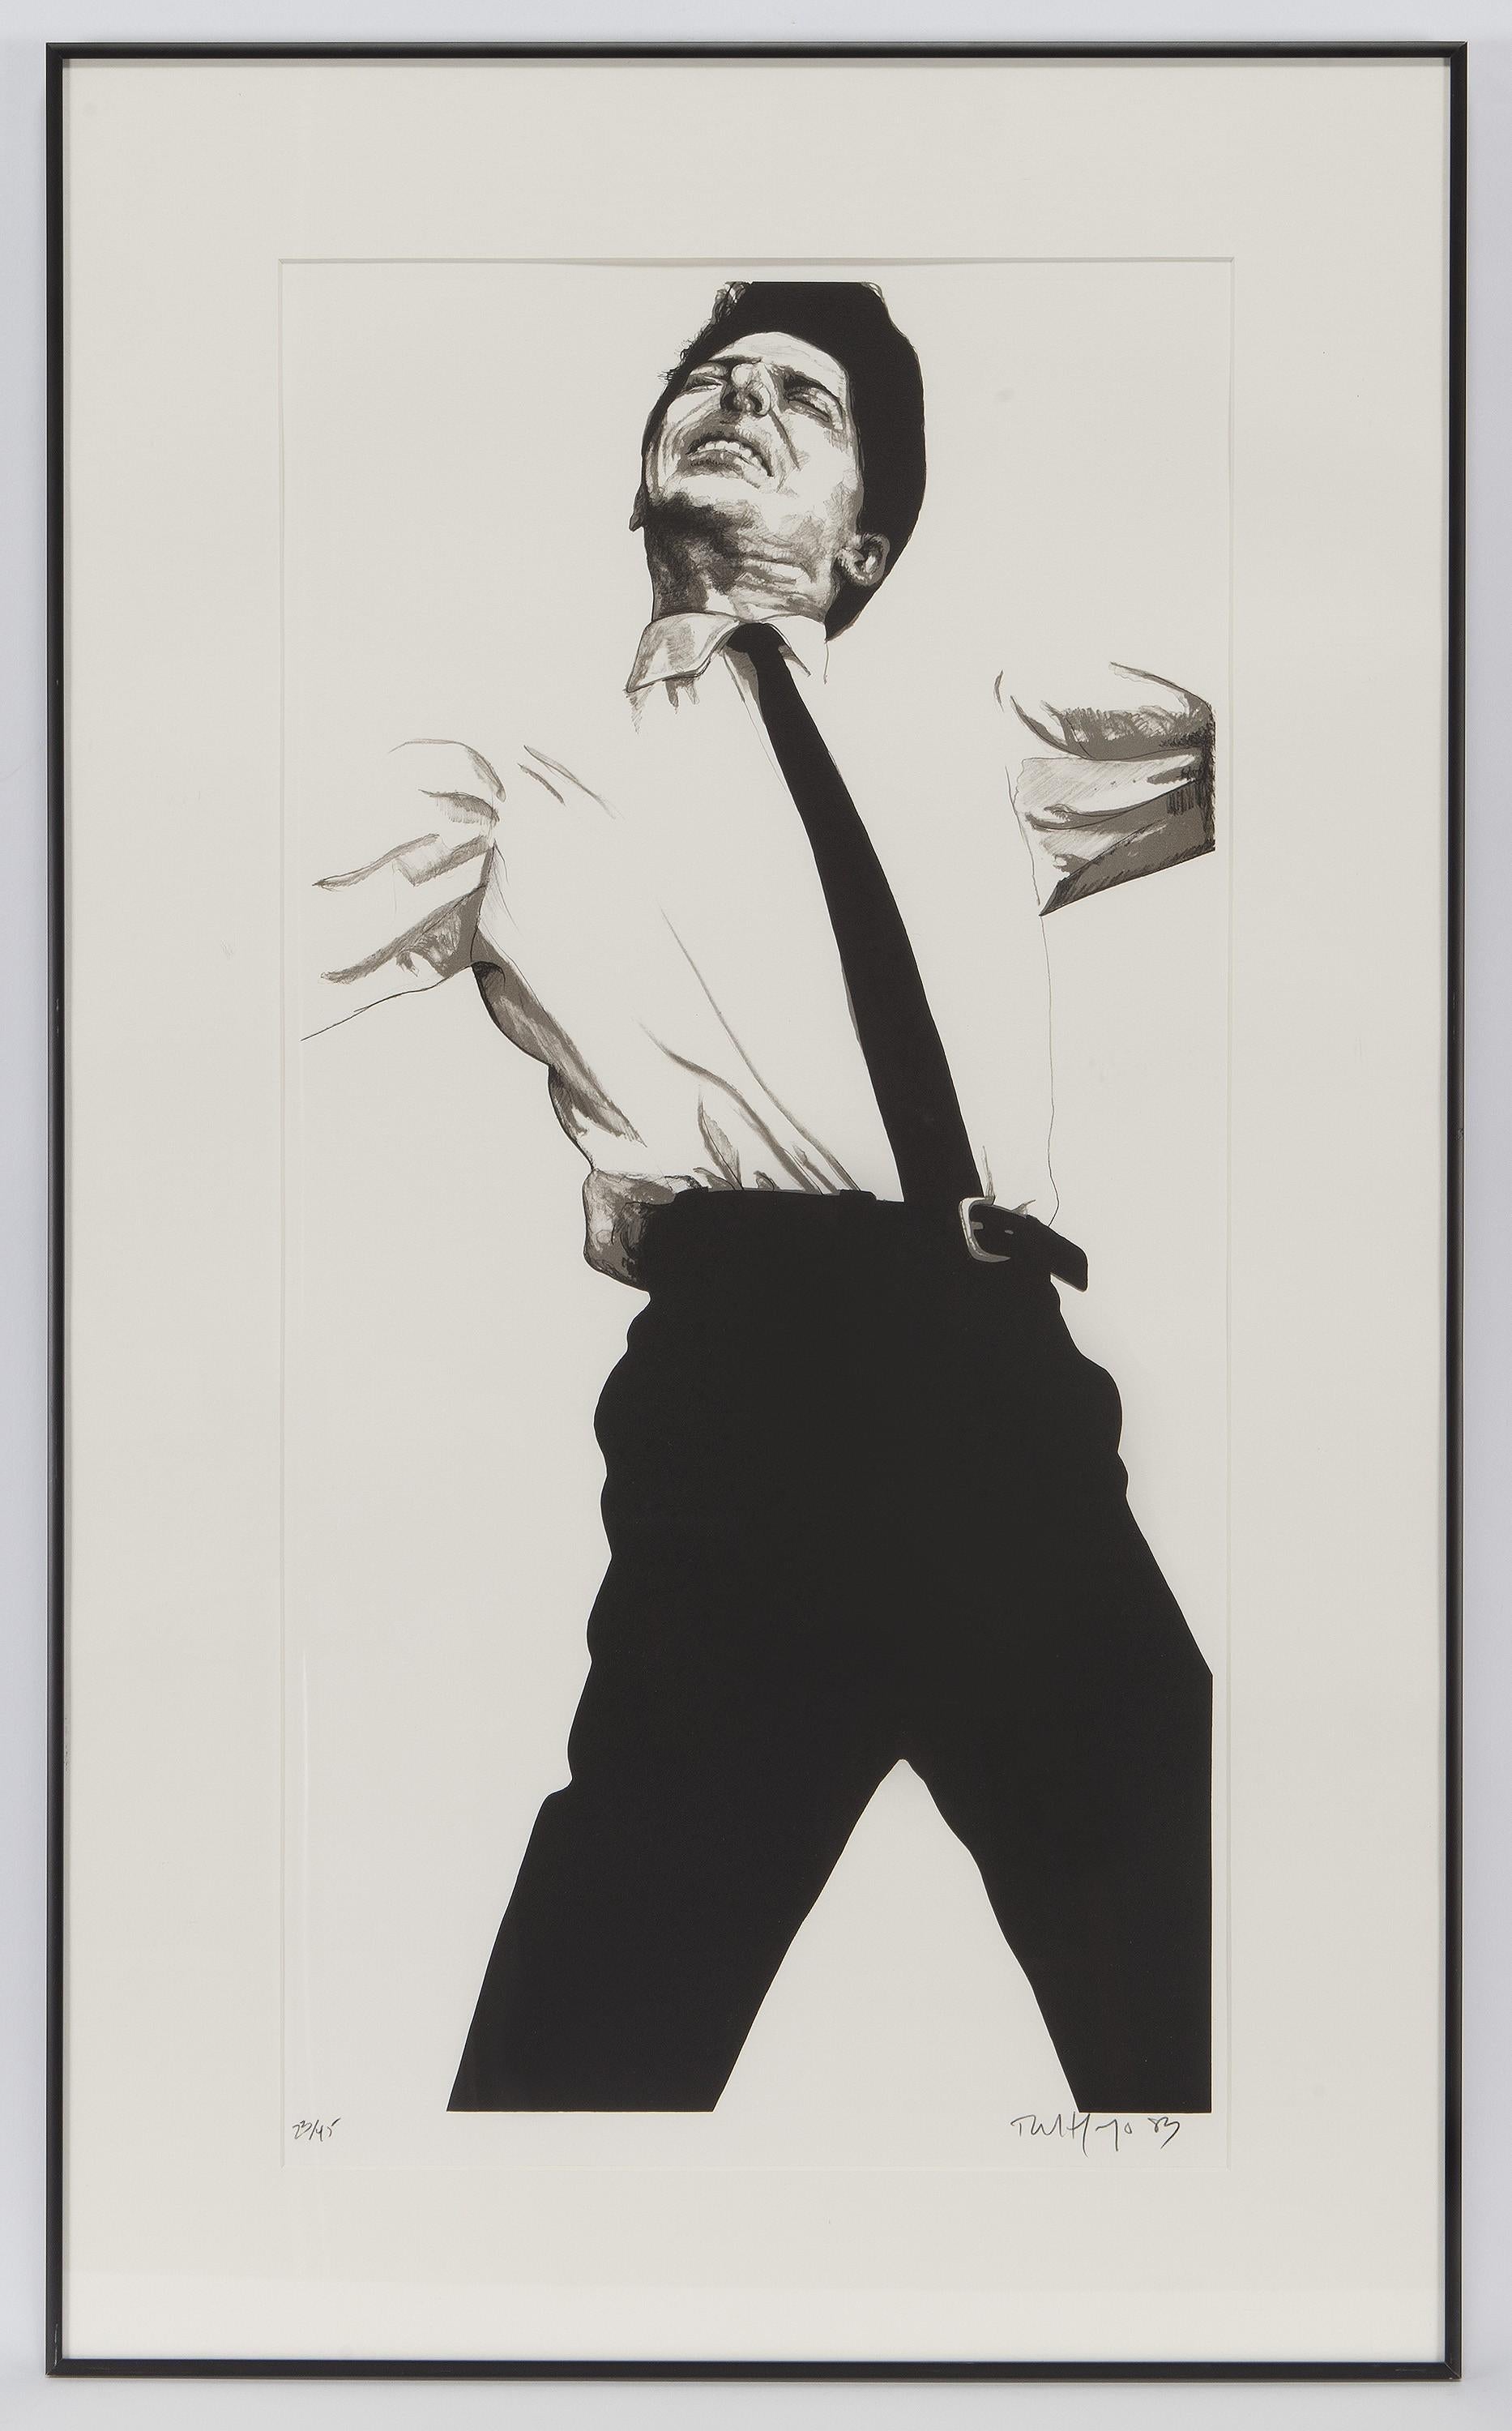 Robert Longo Portrait Print – Jules aus "Männer in den Städten", 1983